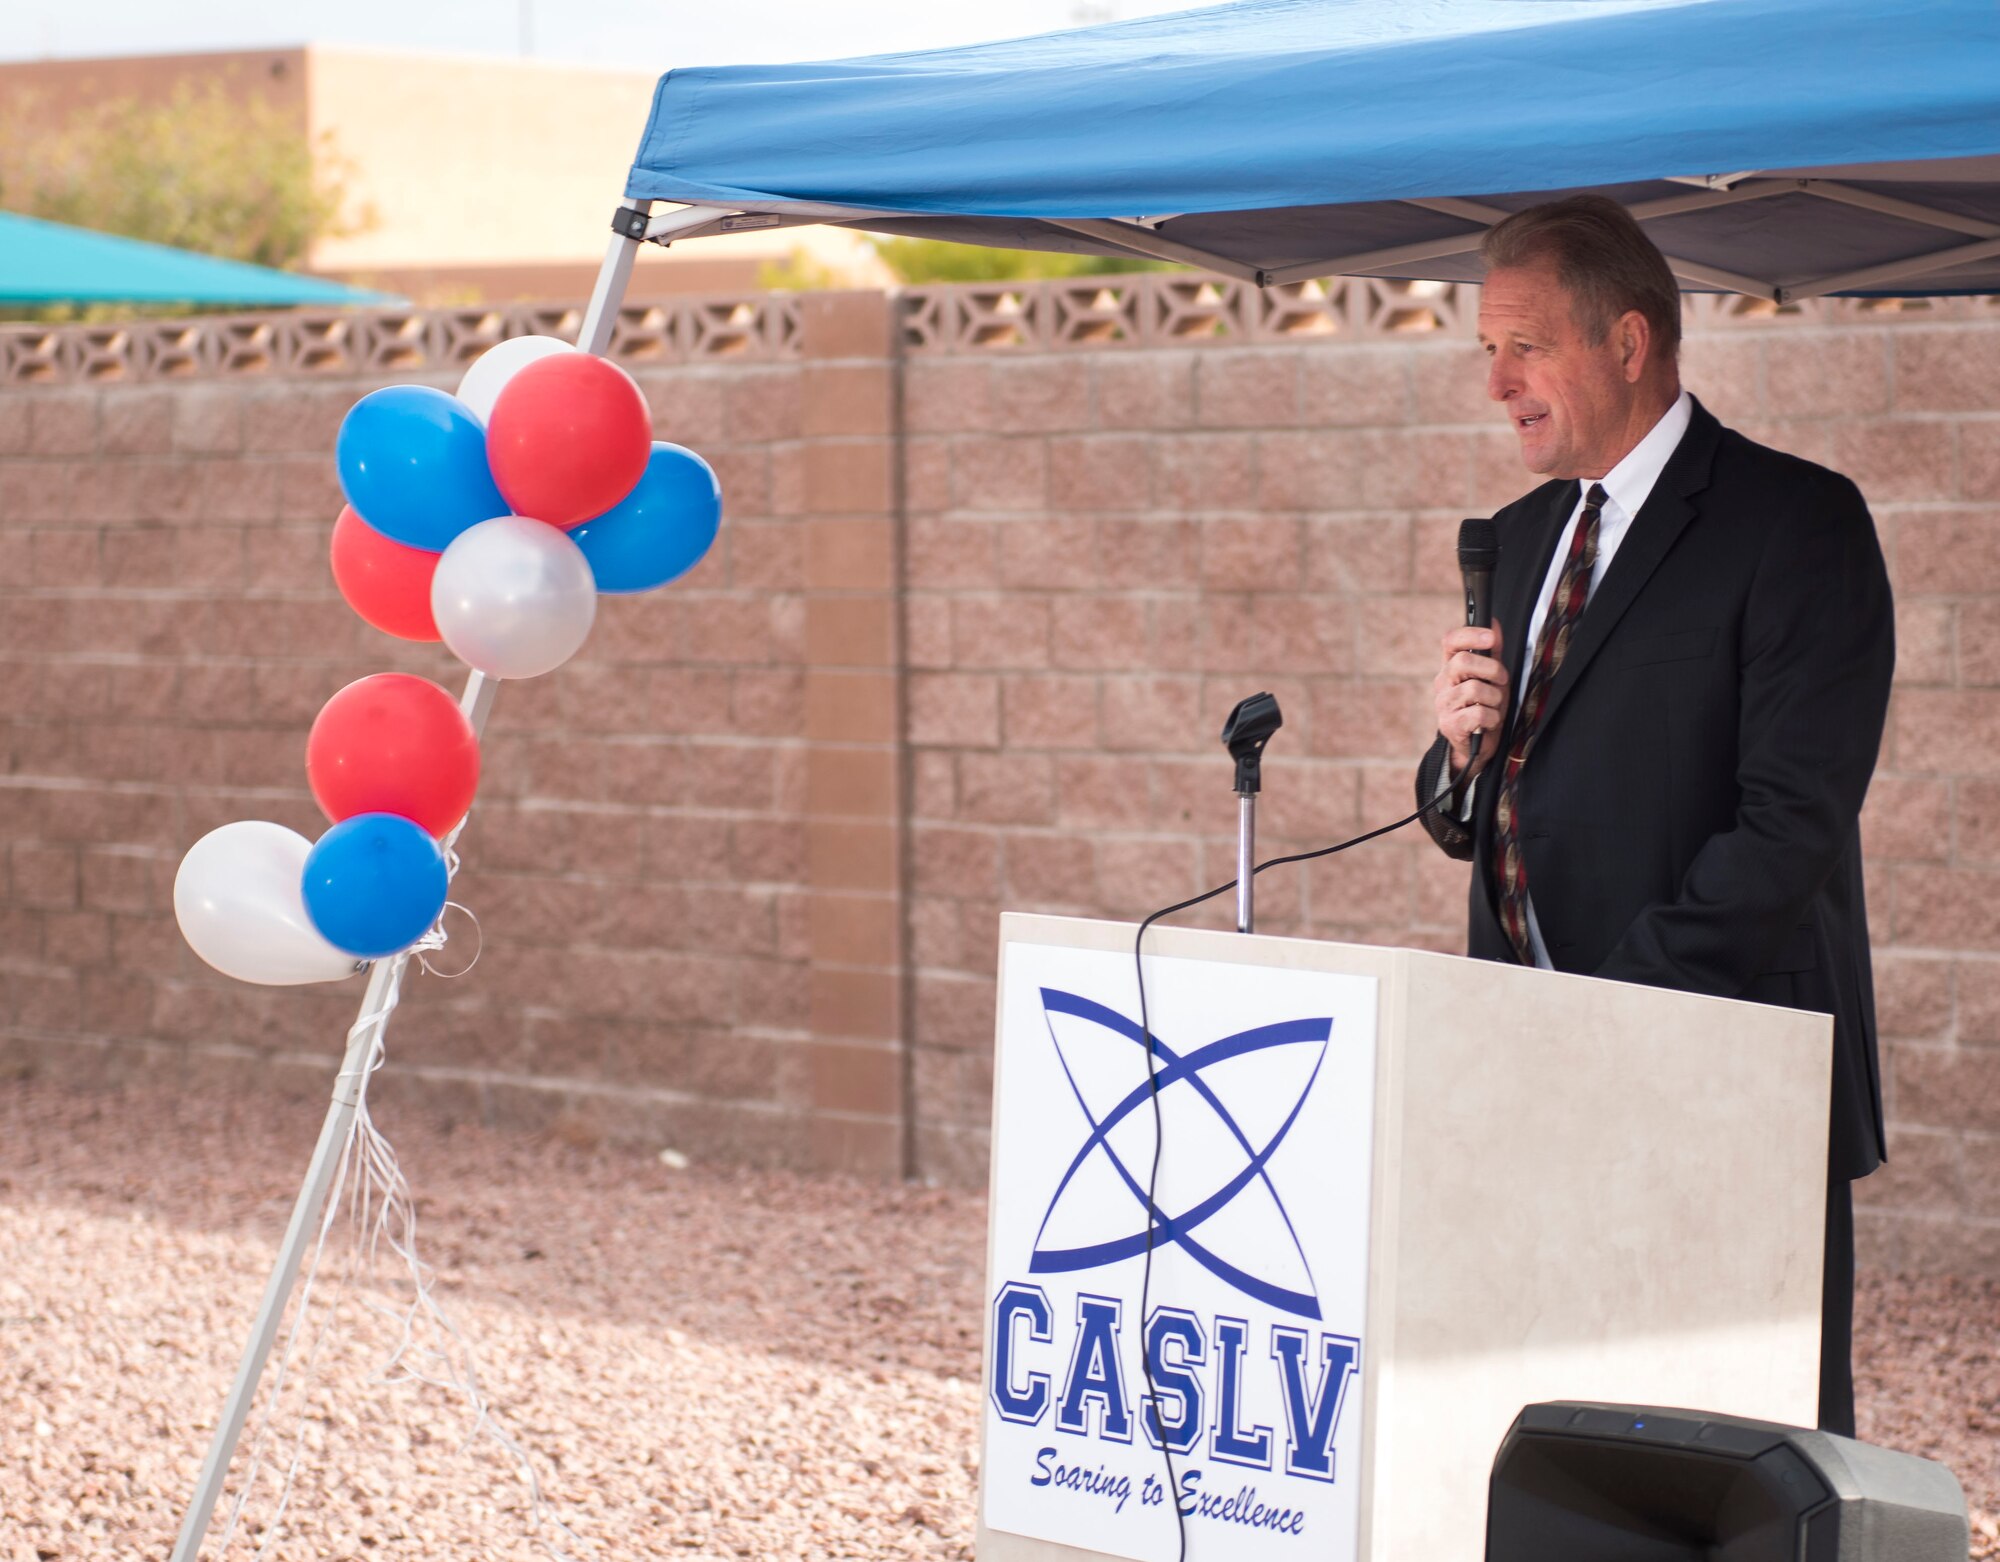 Mayor of North Las Vegas stands behind a podium speaking.